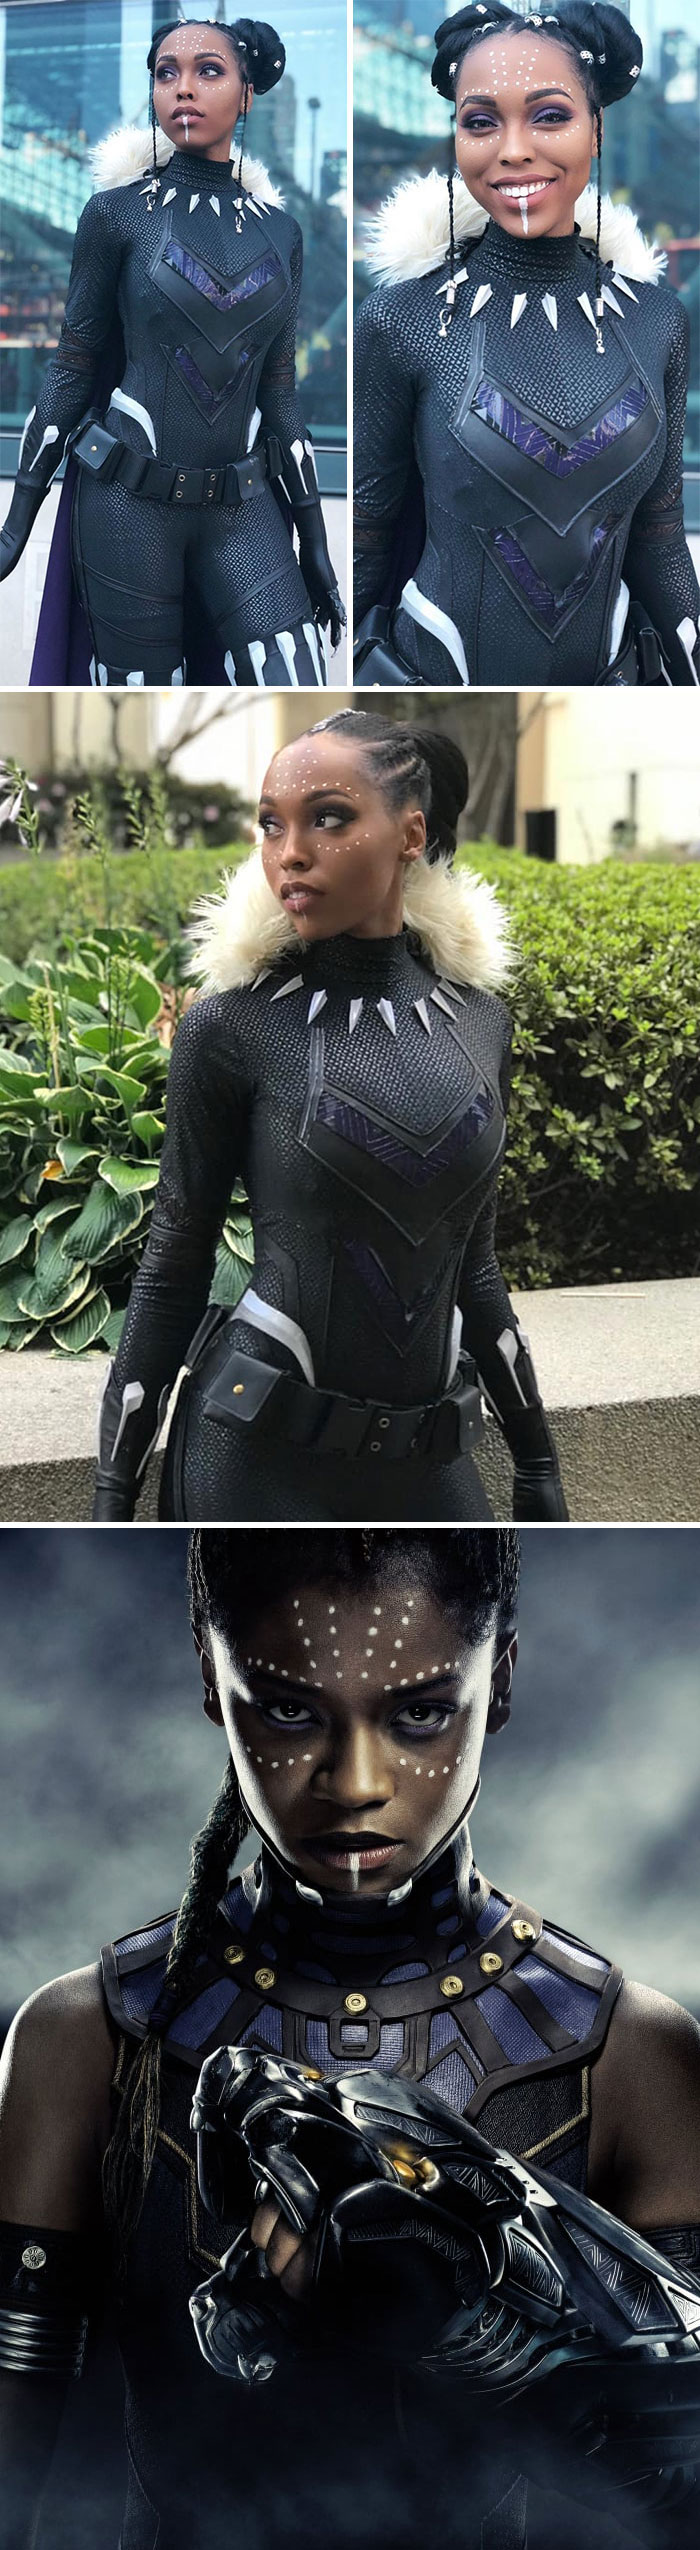 Black panther cosplay